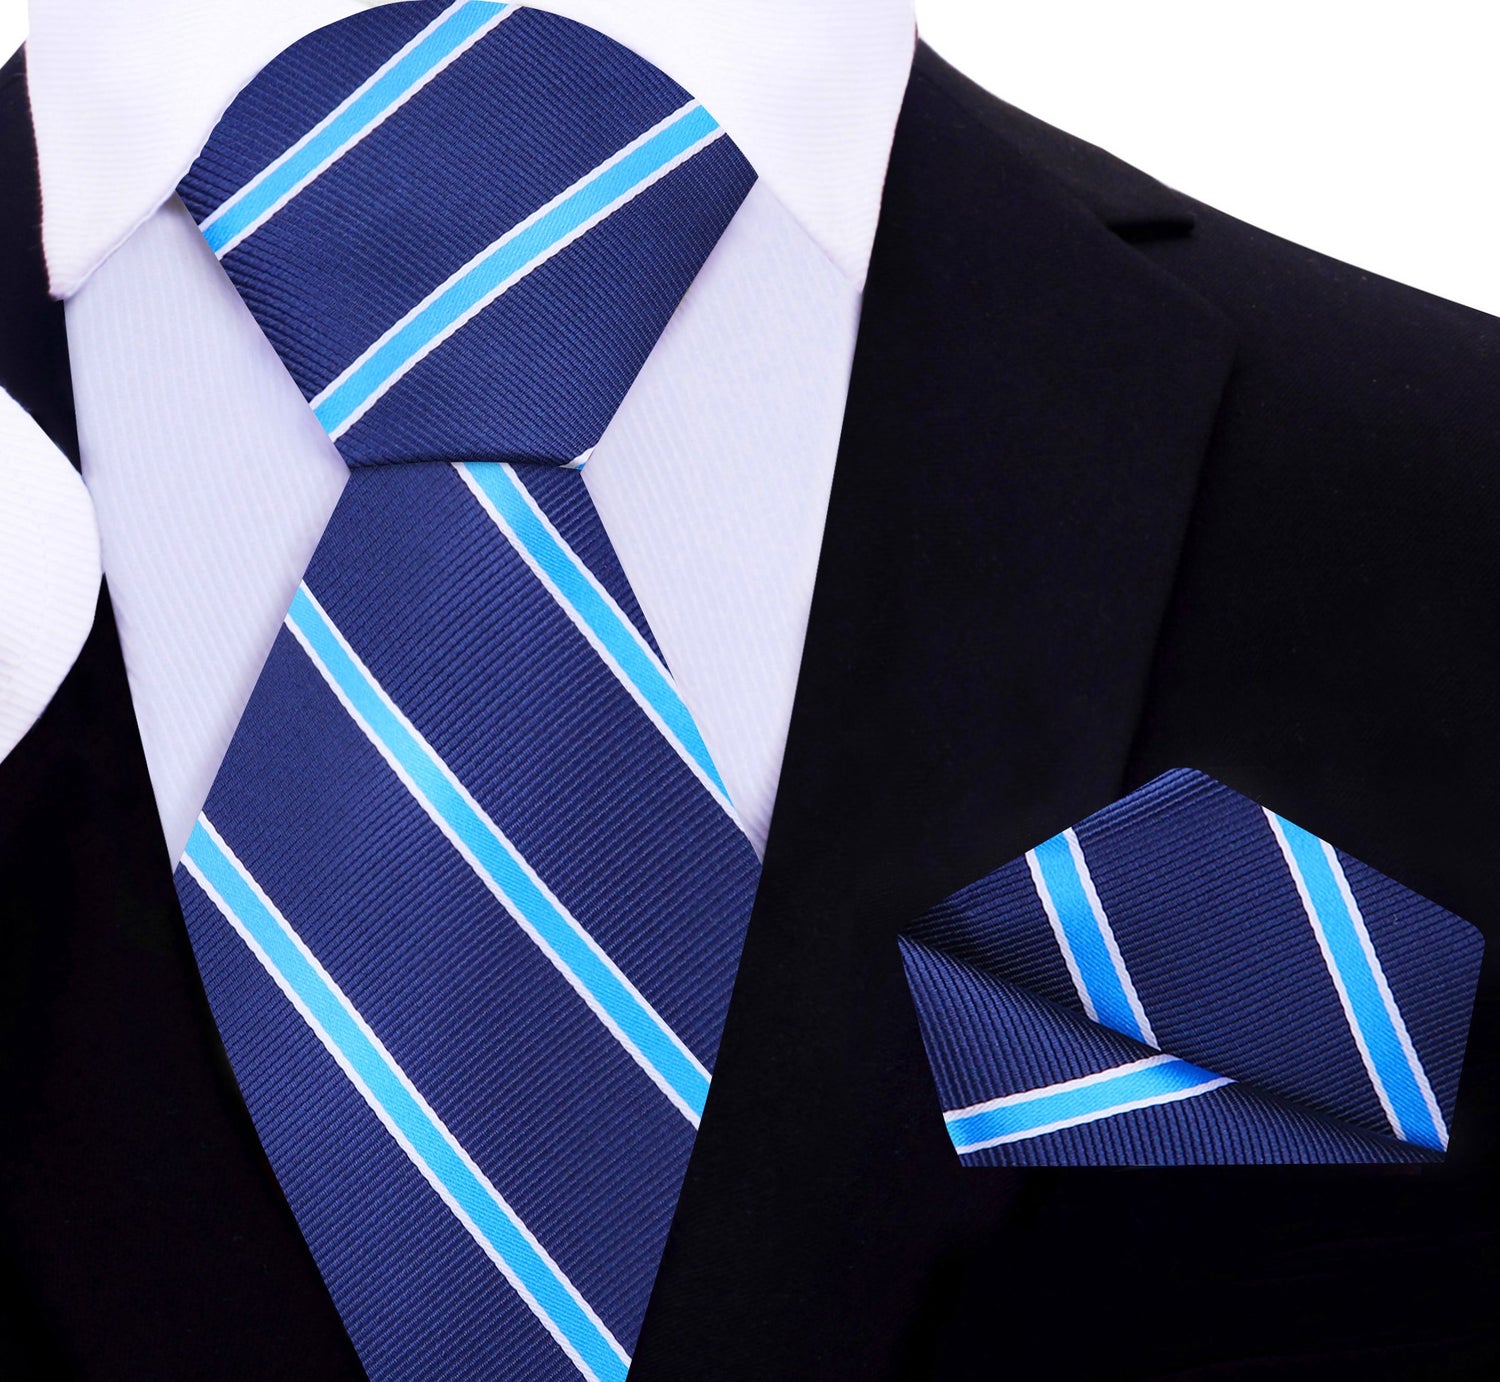 Coach PRIME Deion Sanders Dark Blue, Light Blue Stripe Tie and Pocket Square